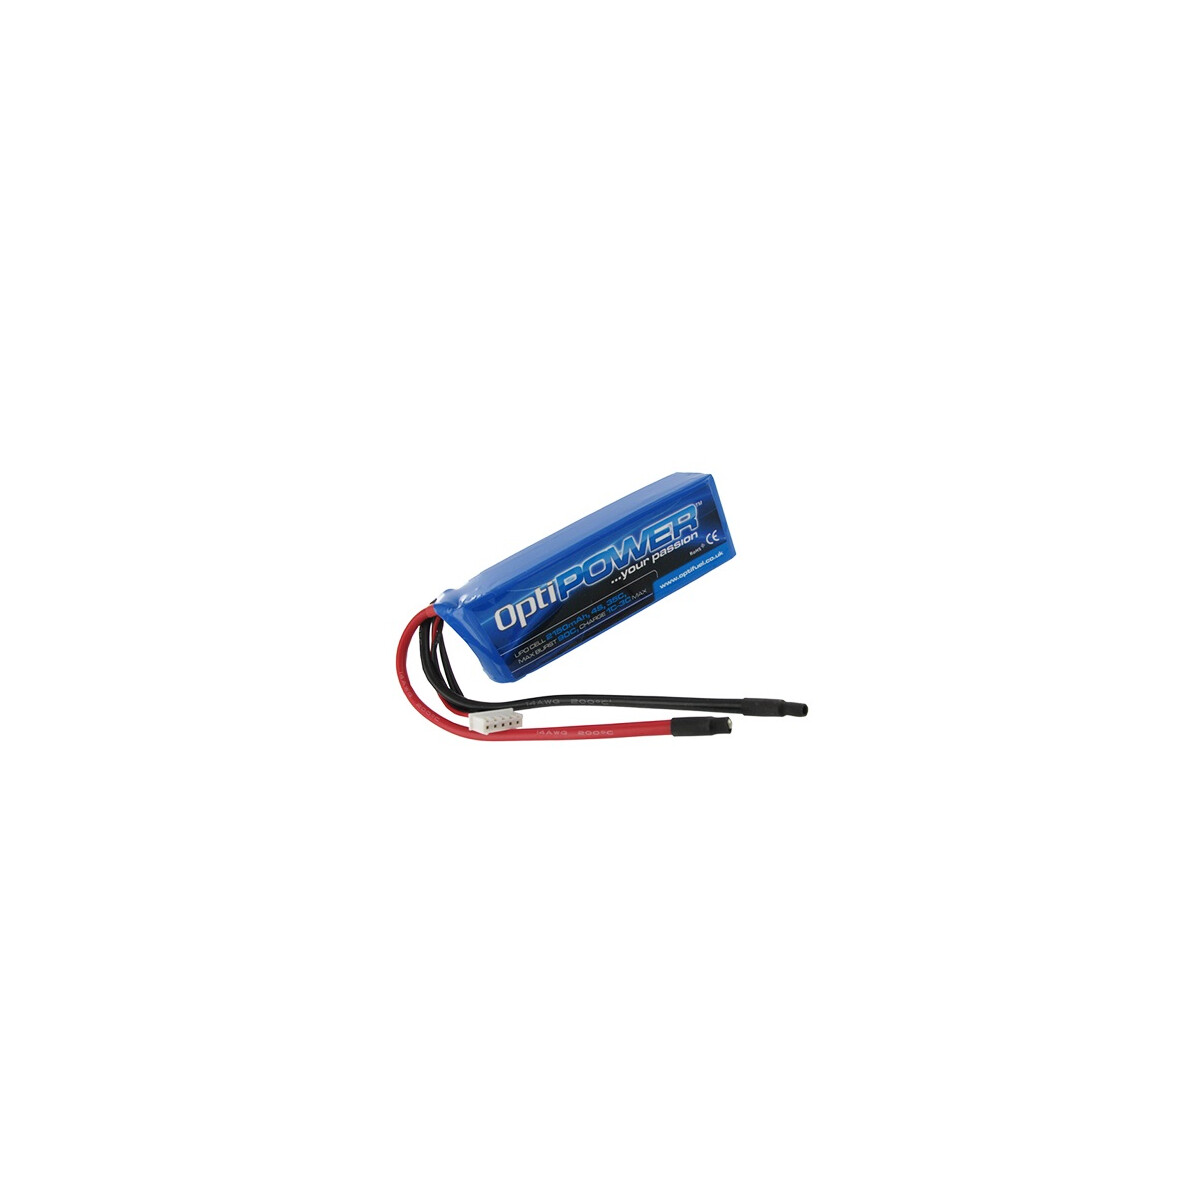 OptiPower Lipo Cell Battery 2150mAh 4S 35C